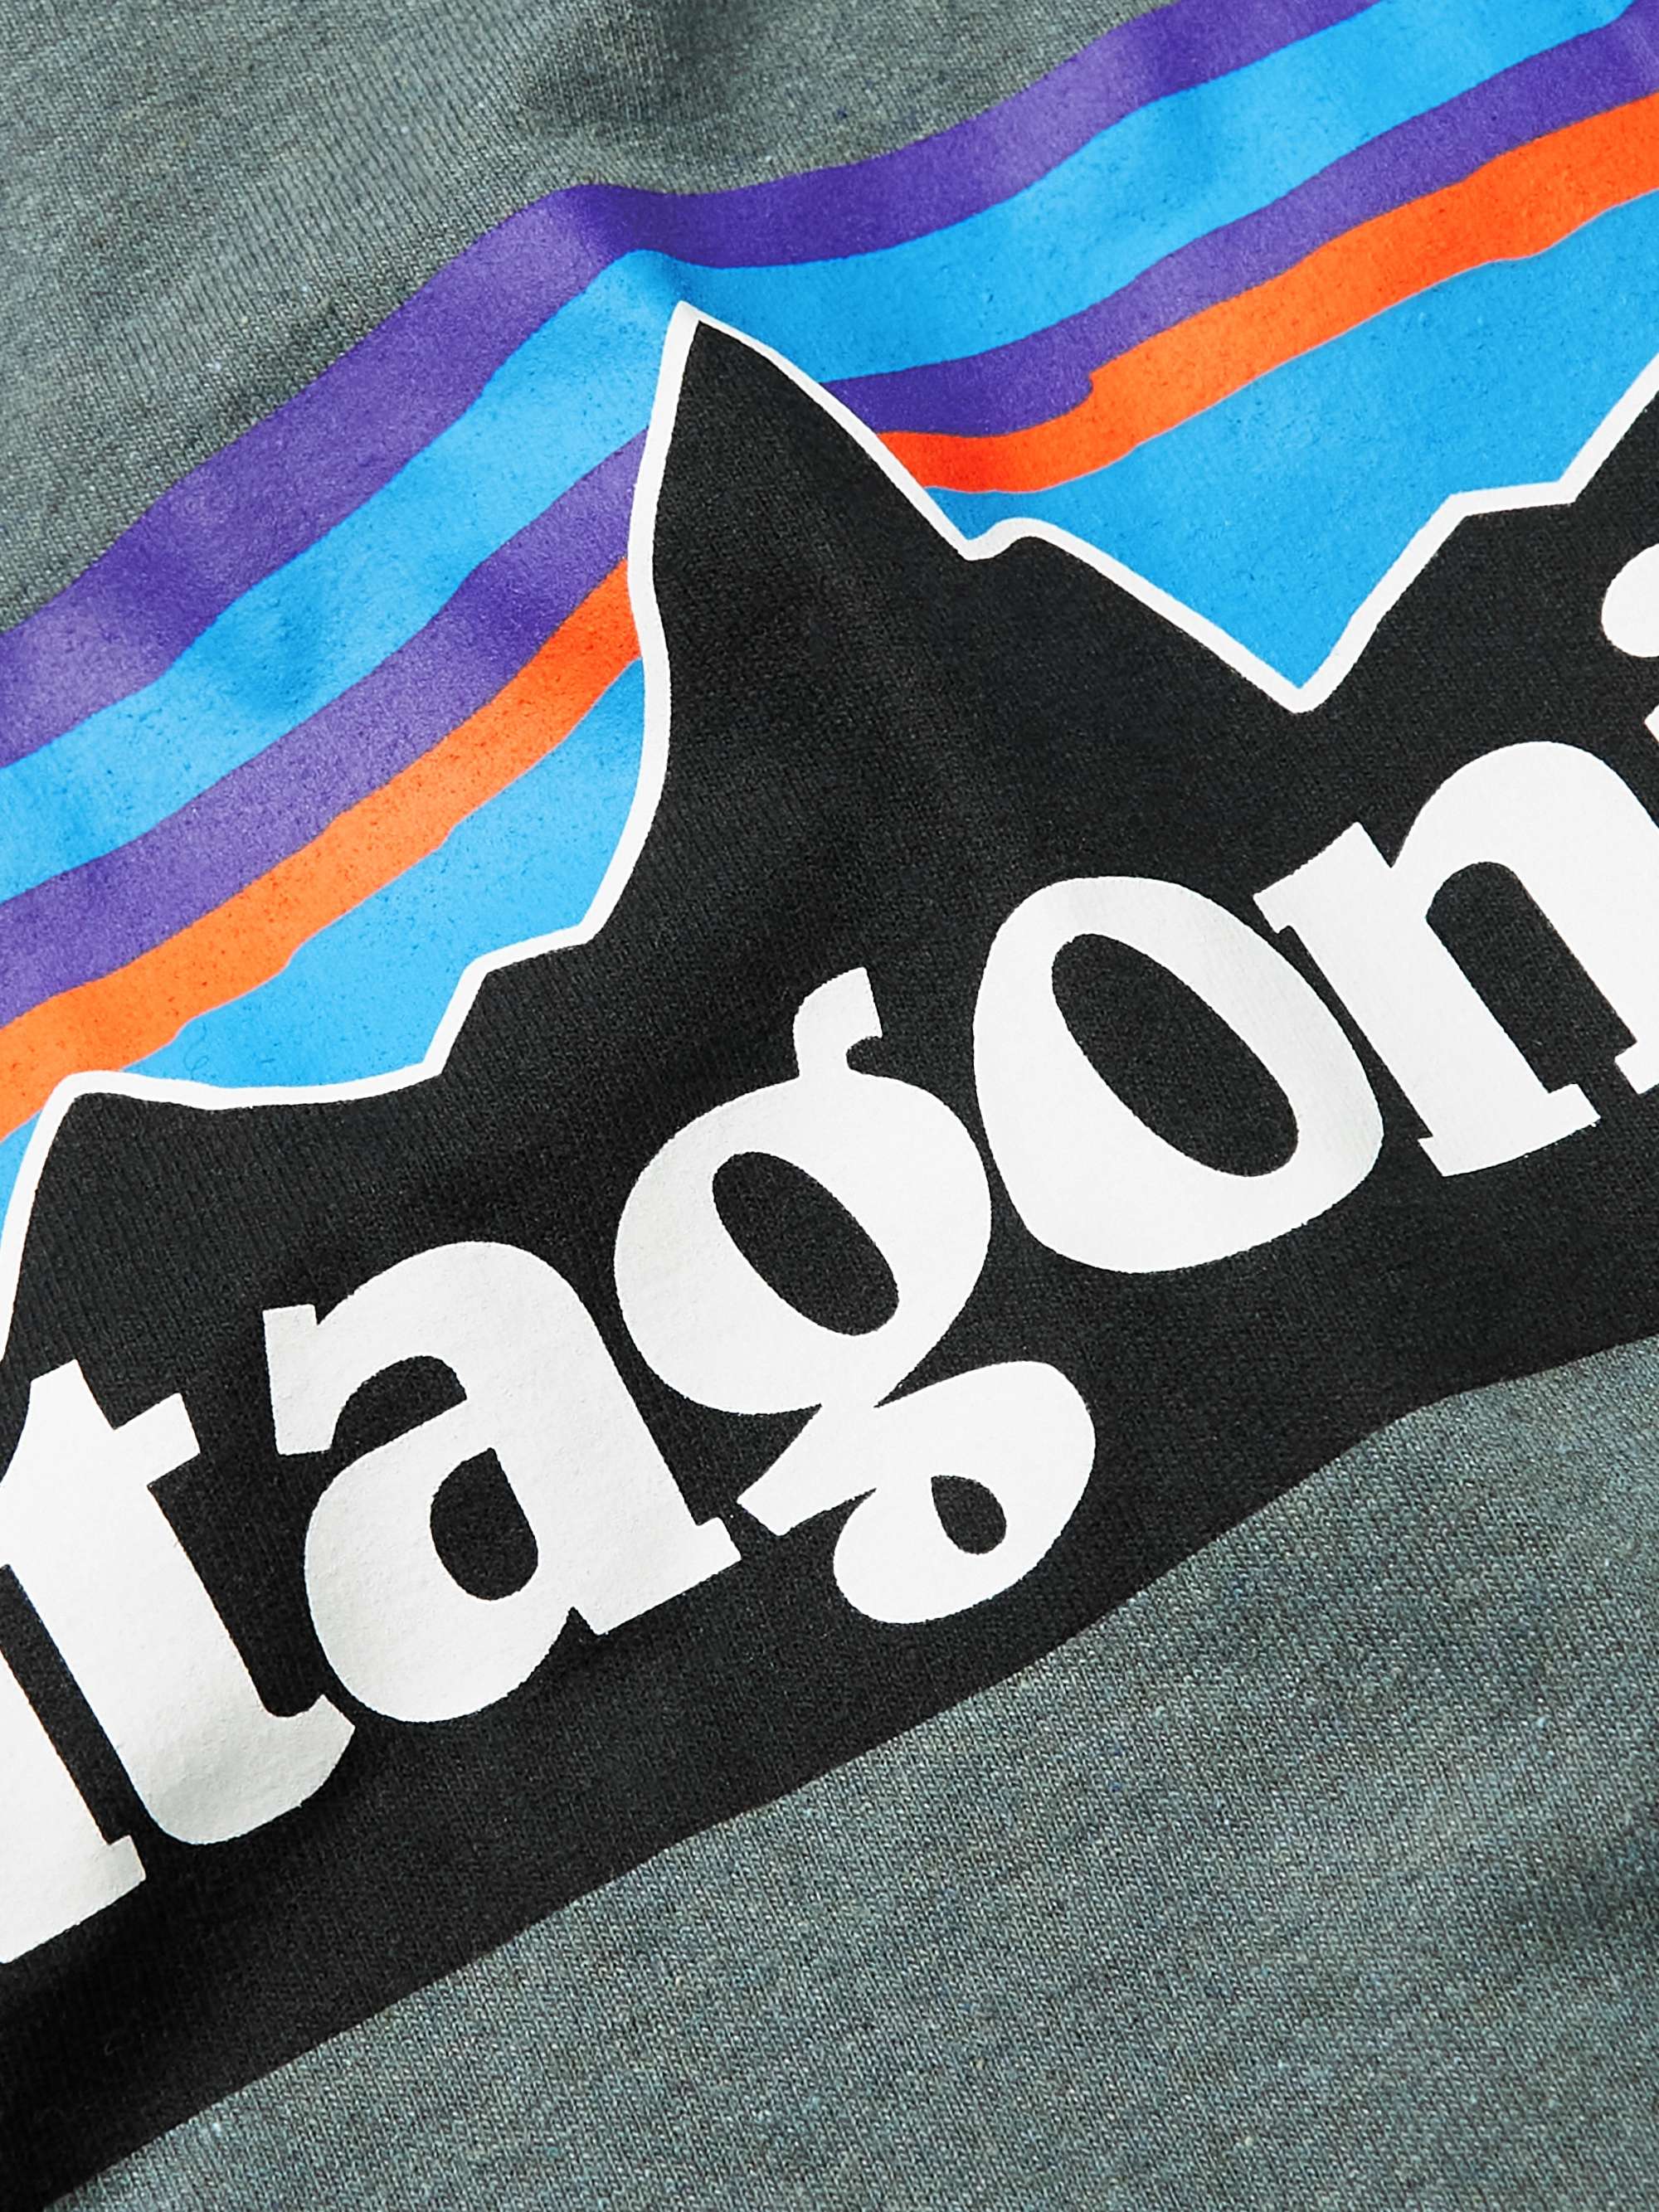 PATAGONIA P-6 Logo Responsibili-Tee Printed Recycled Cotton-Blend Jersey T-Shirt